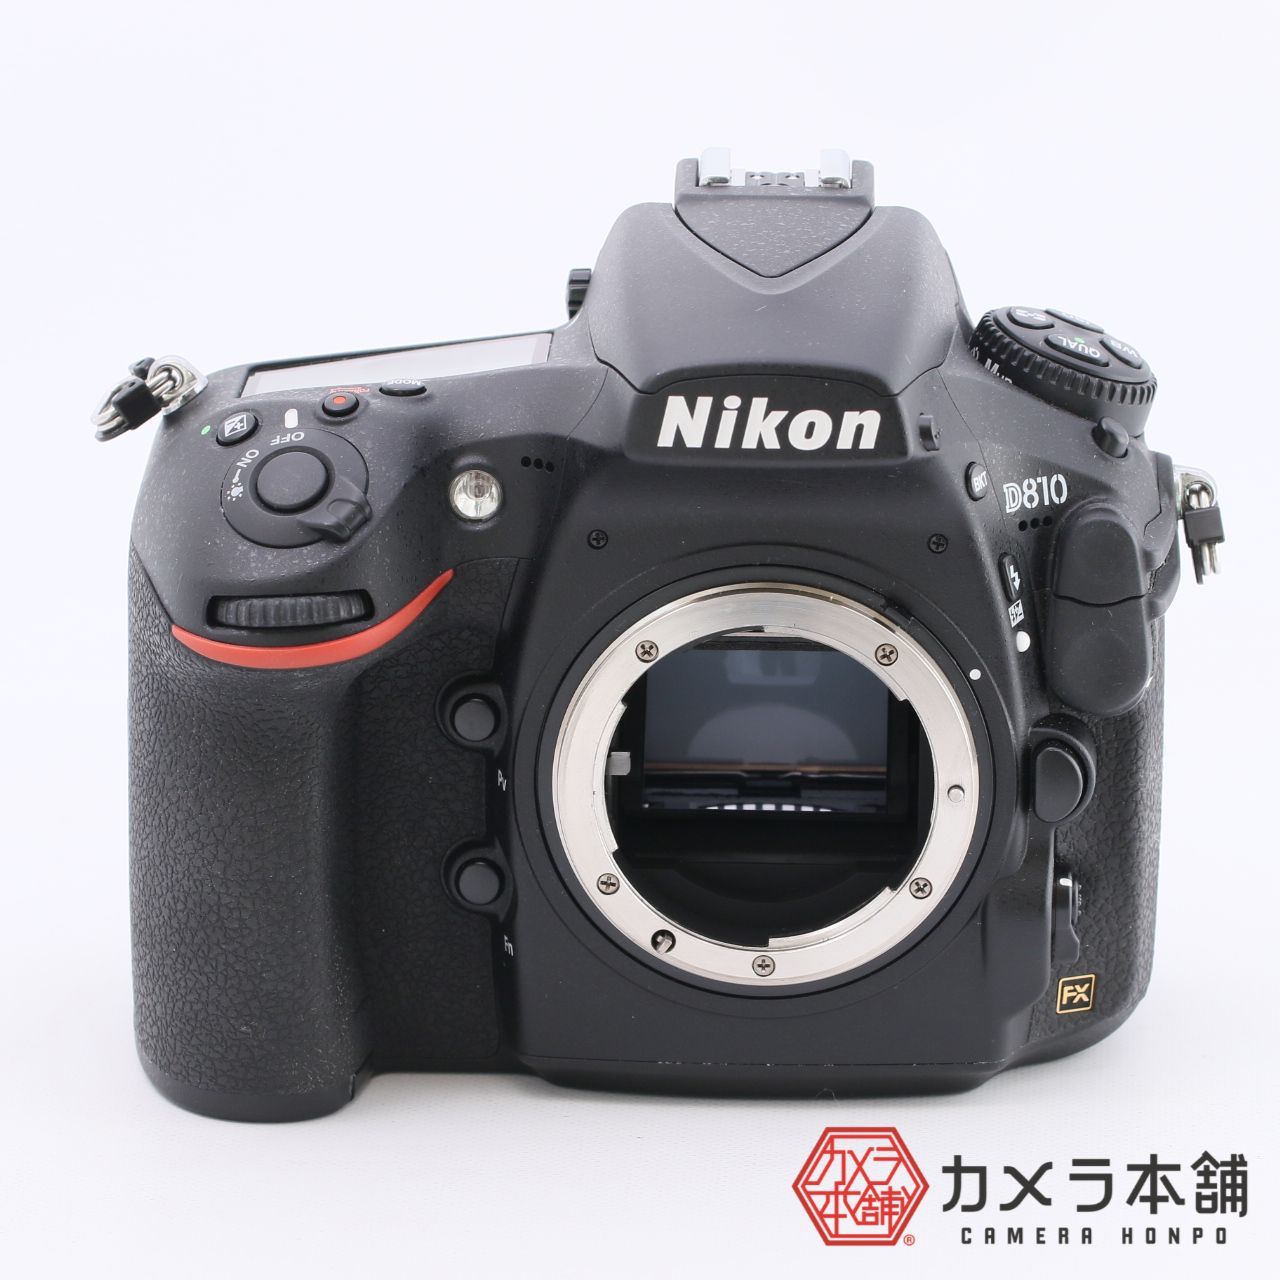 Nikon ニコン デジタル一眼レフカメラ D810 ボディ 元箱つき カメラ本舗｜Camera honpo メルカリ